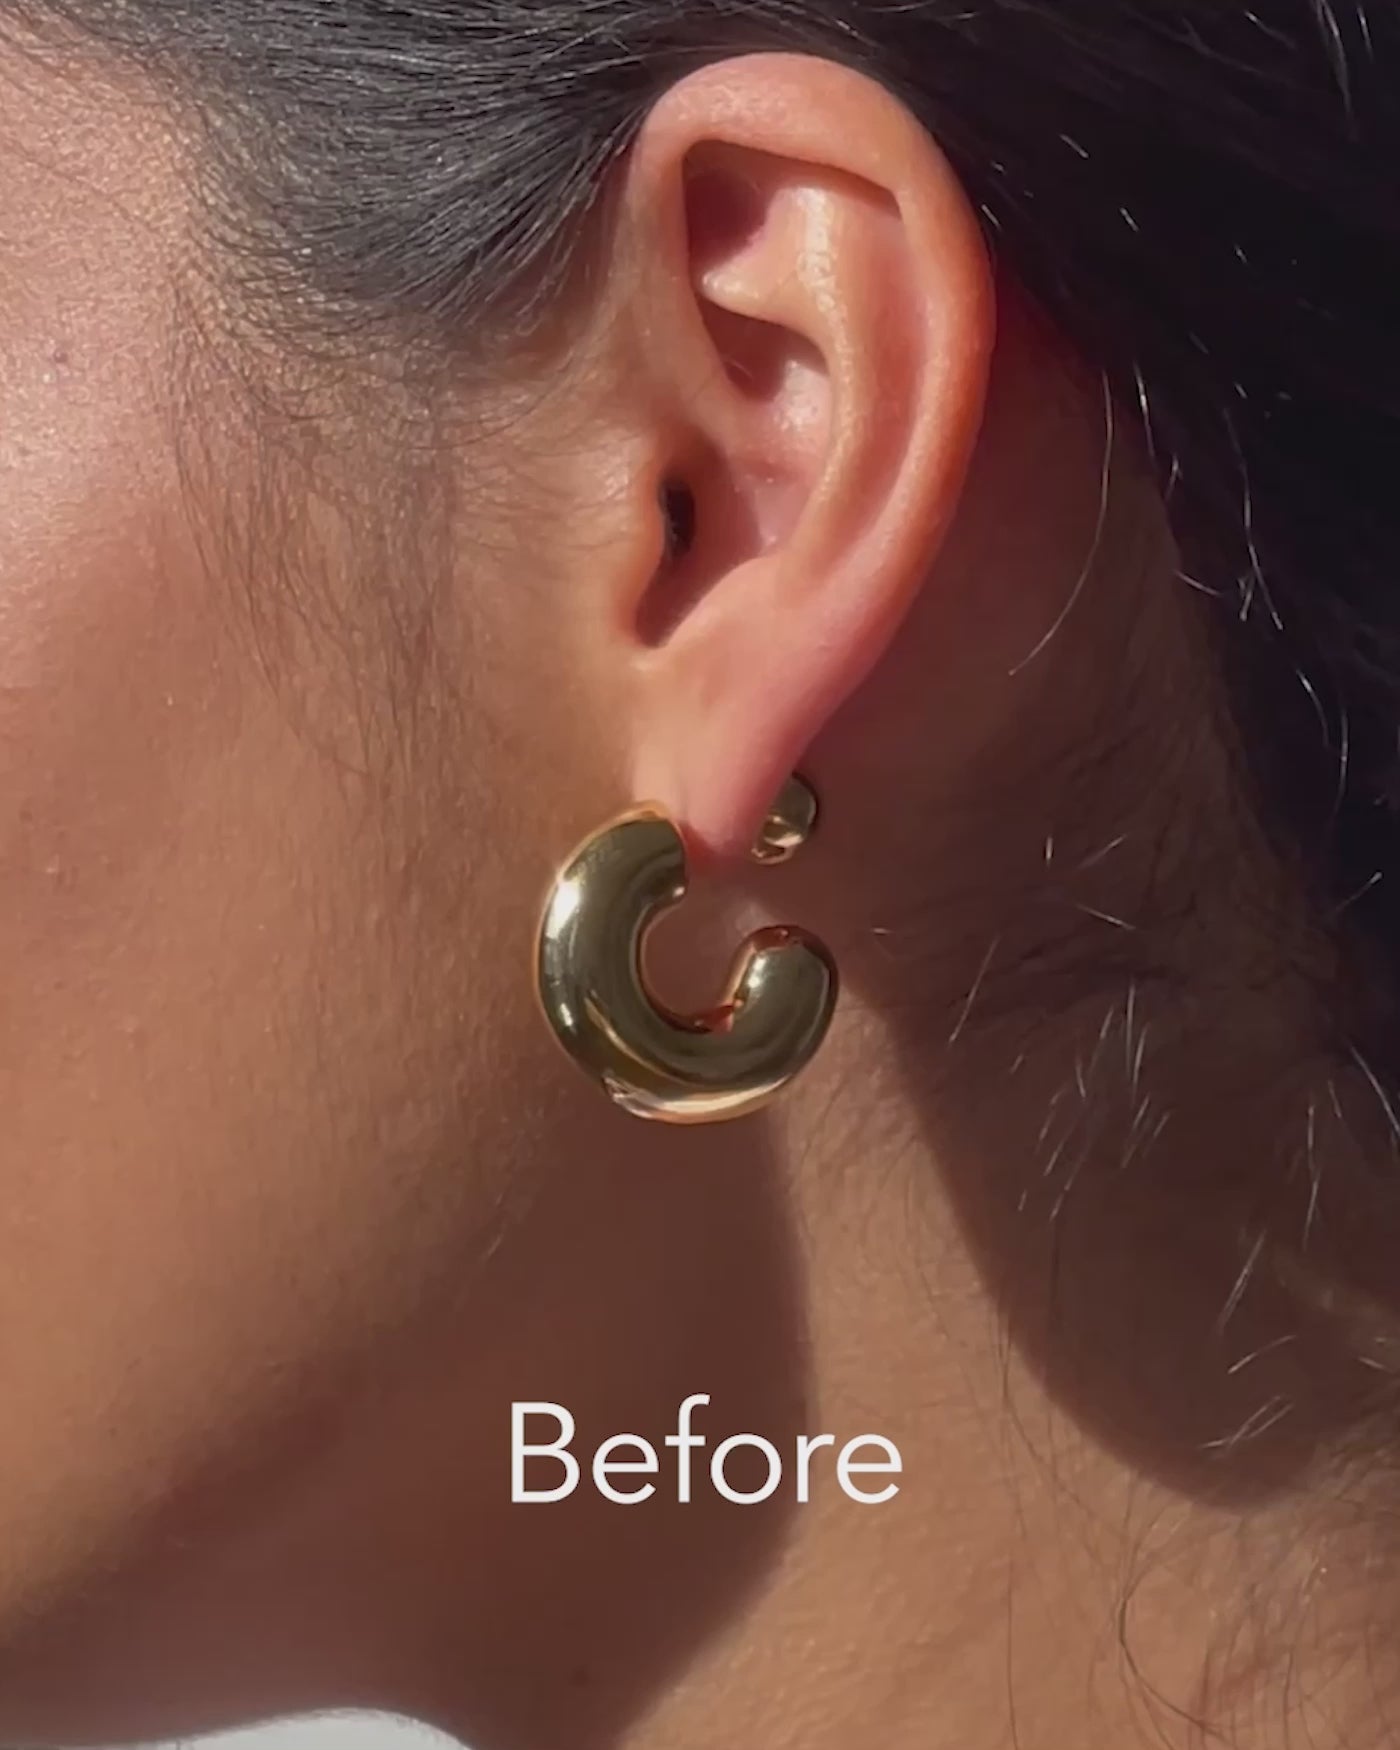 3 Pairs Earring Lifters,adjustable Earring Backs For Heavy Earring